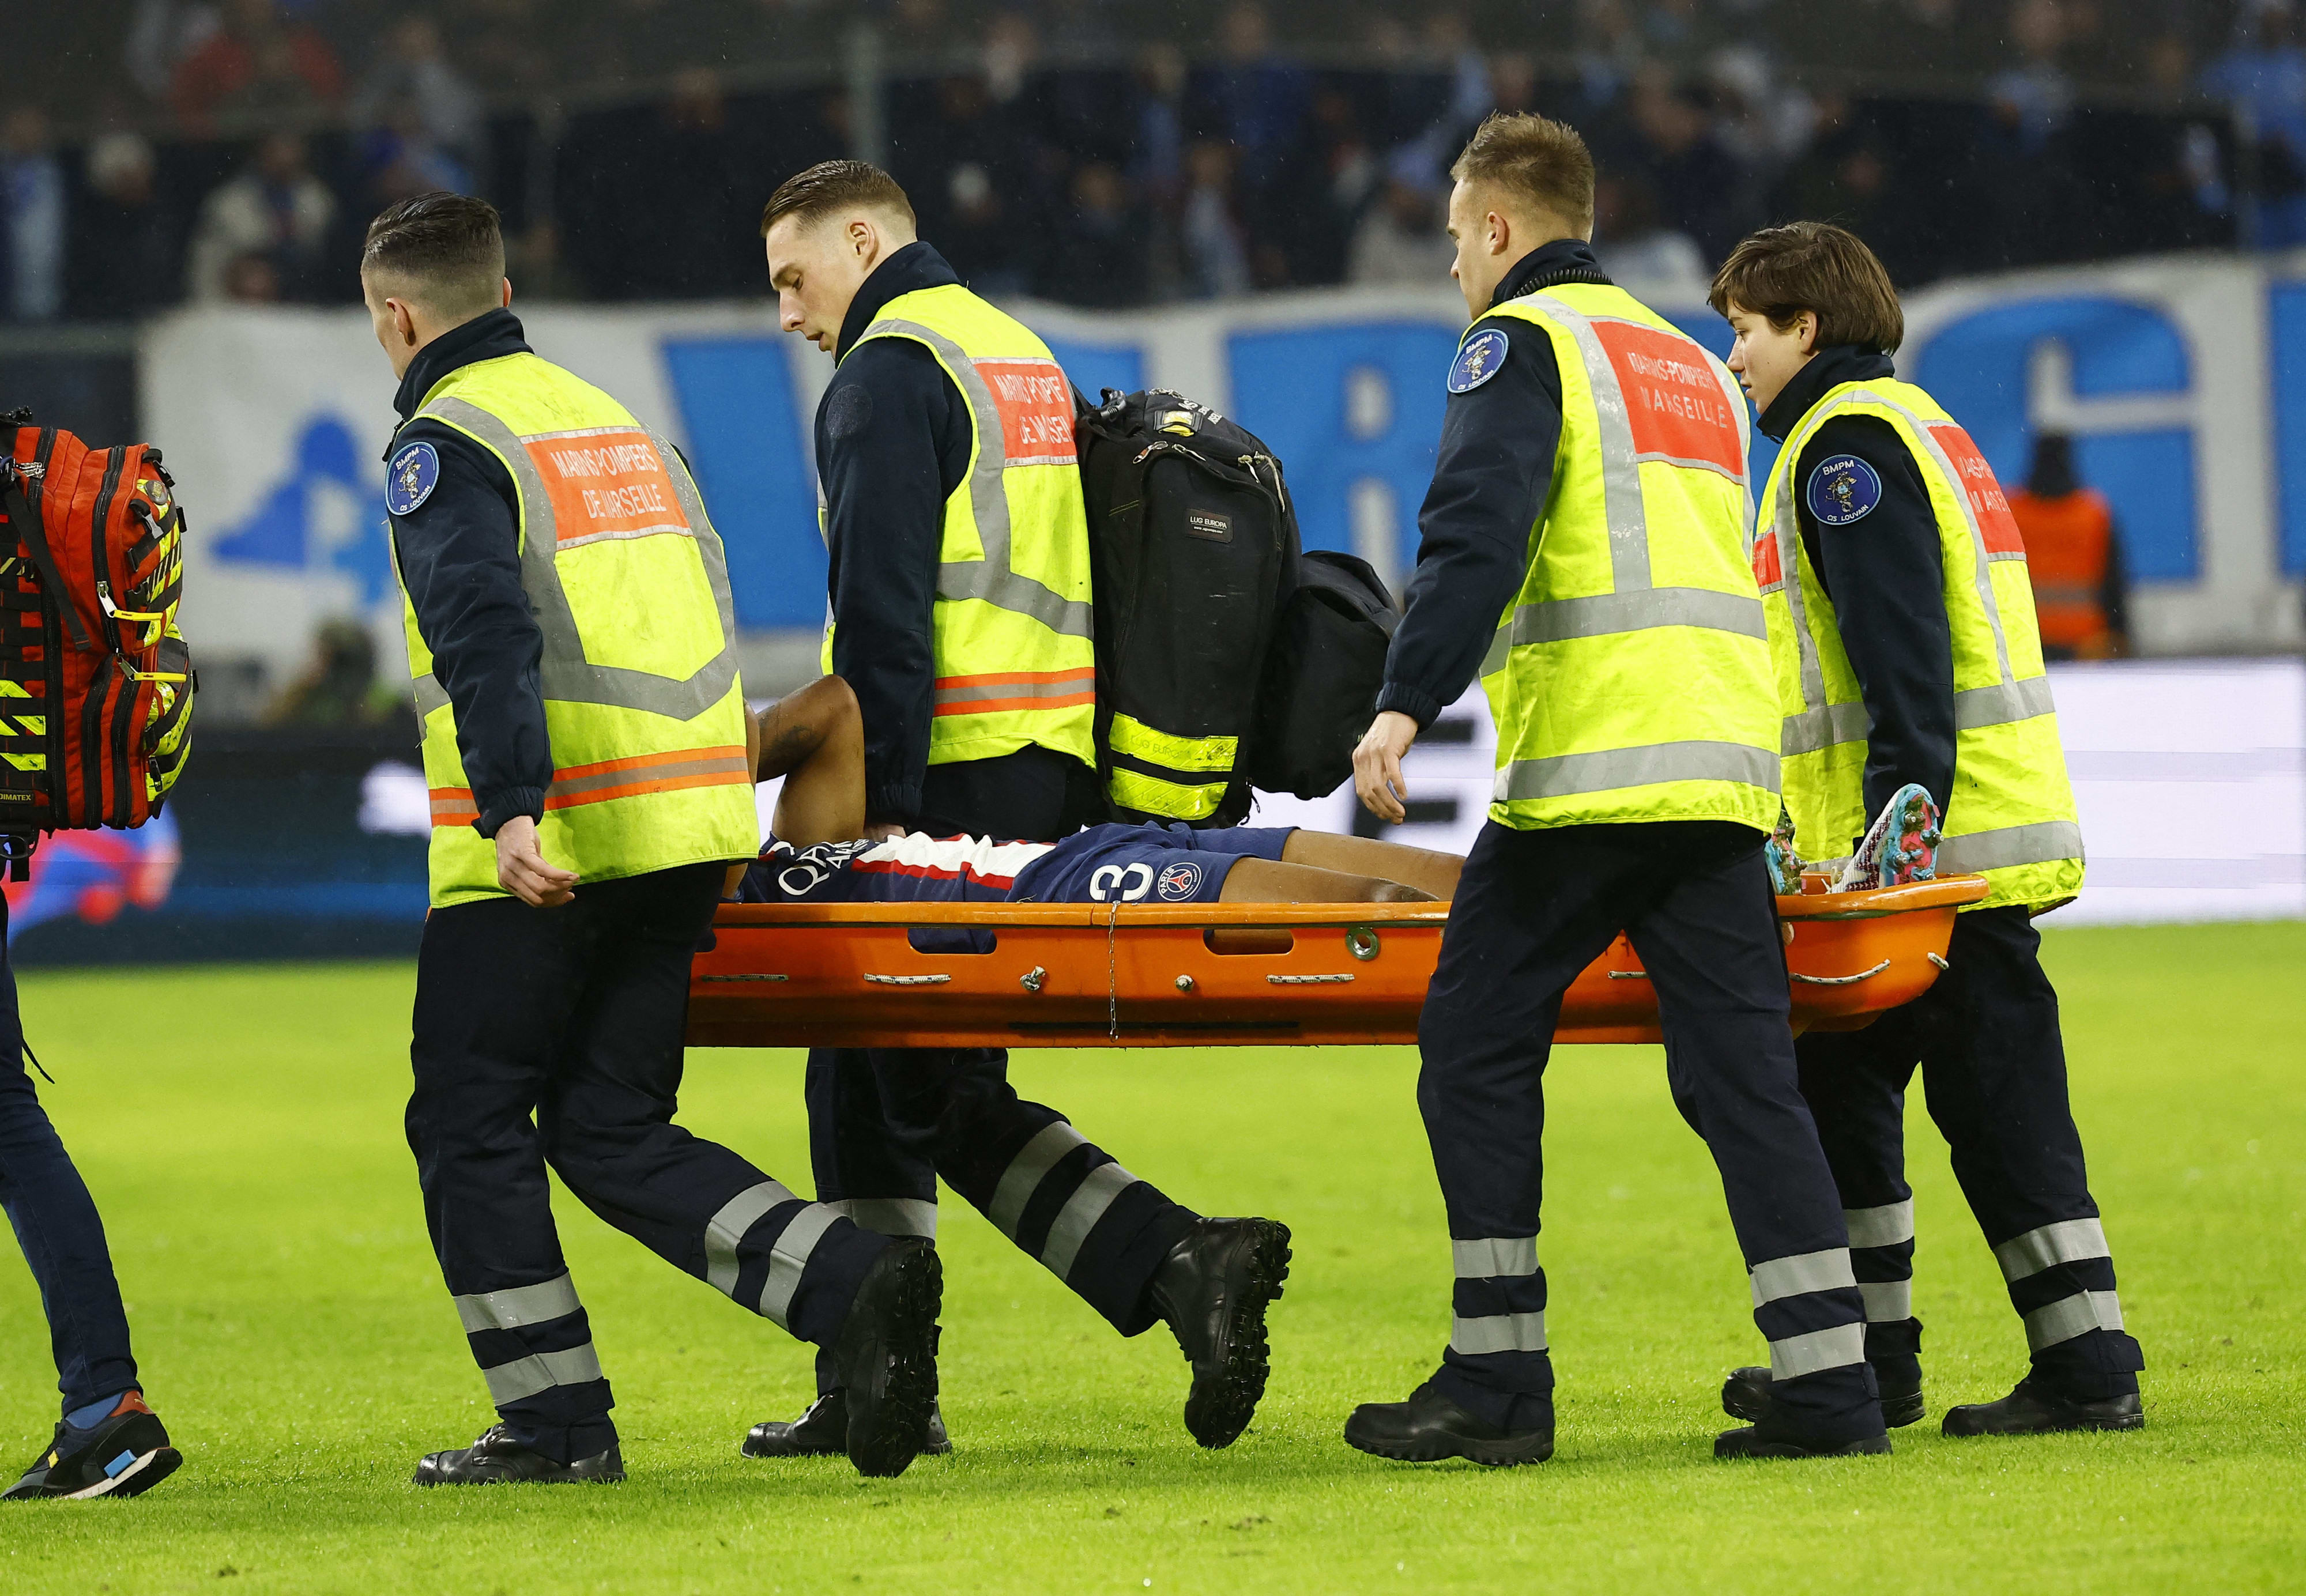 Paris Saint-Germain player Presnel Kimpamba is evacuated on a stretcher